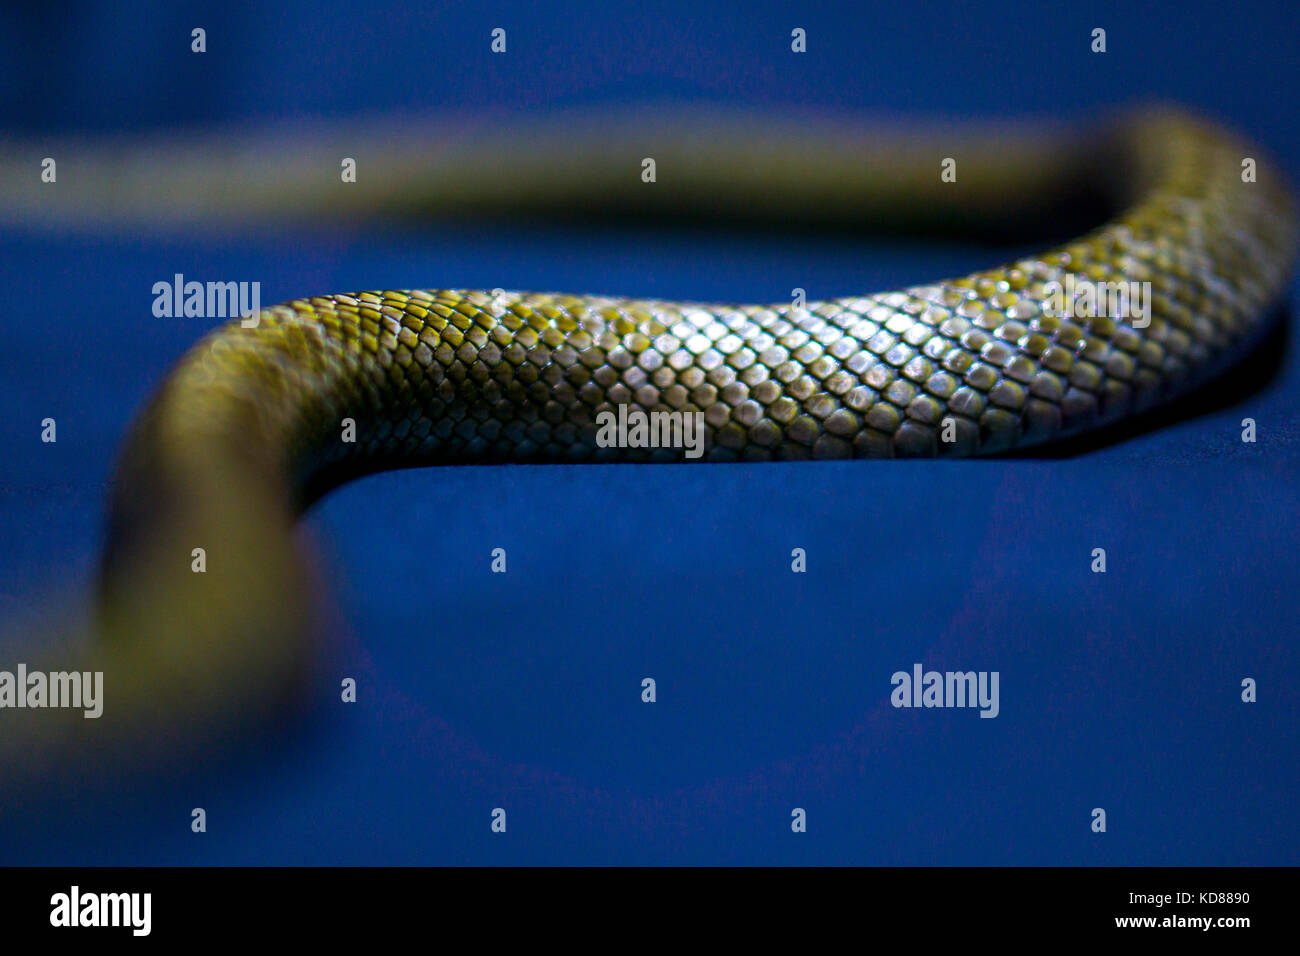 Giallo listati snake on dark-sfondo blu Foto Stock